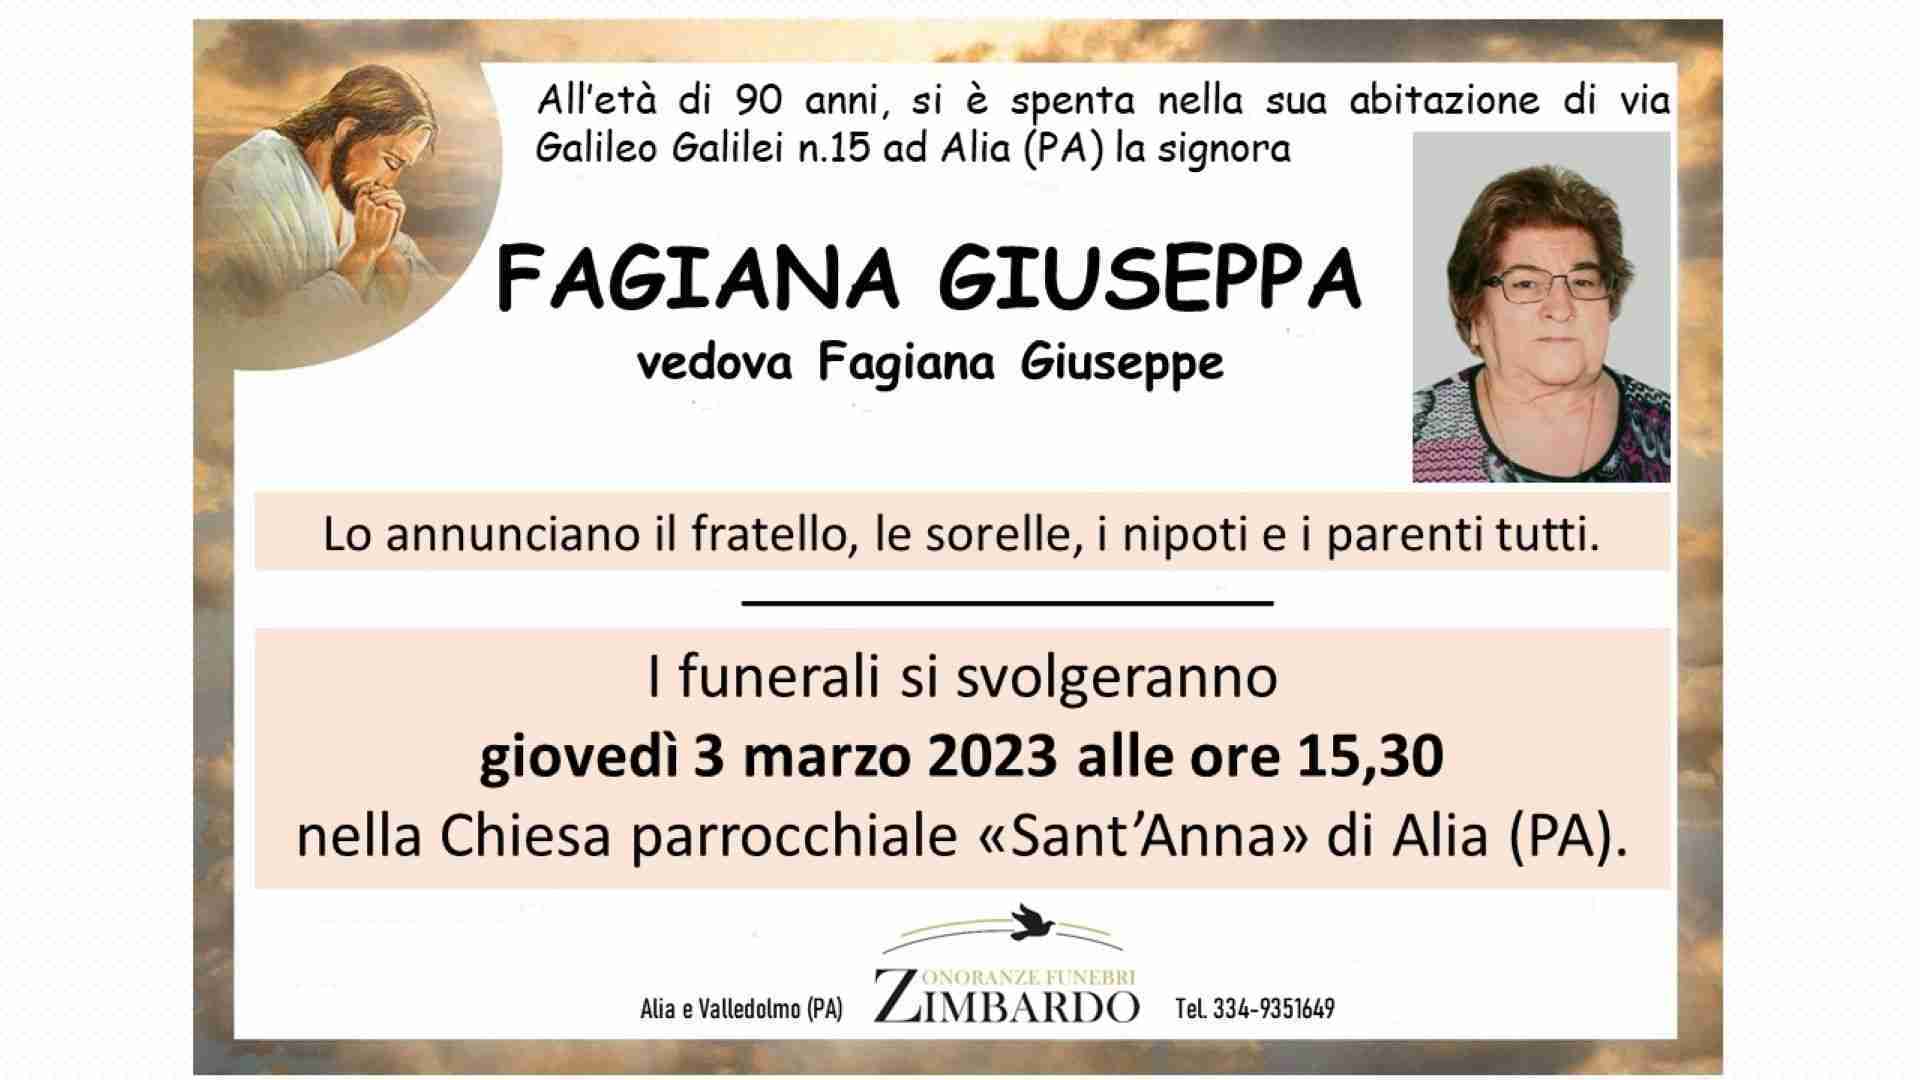 Giuseppa Fagiana